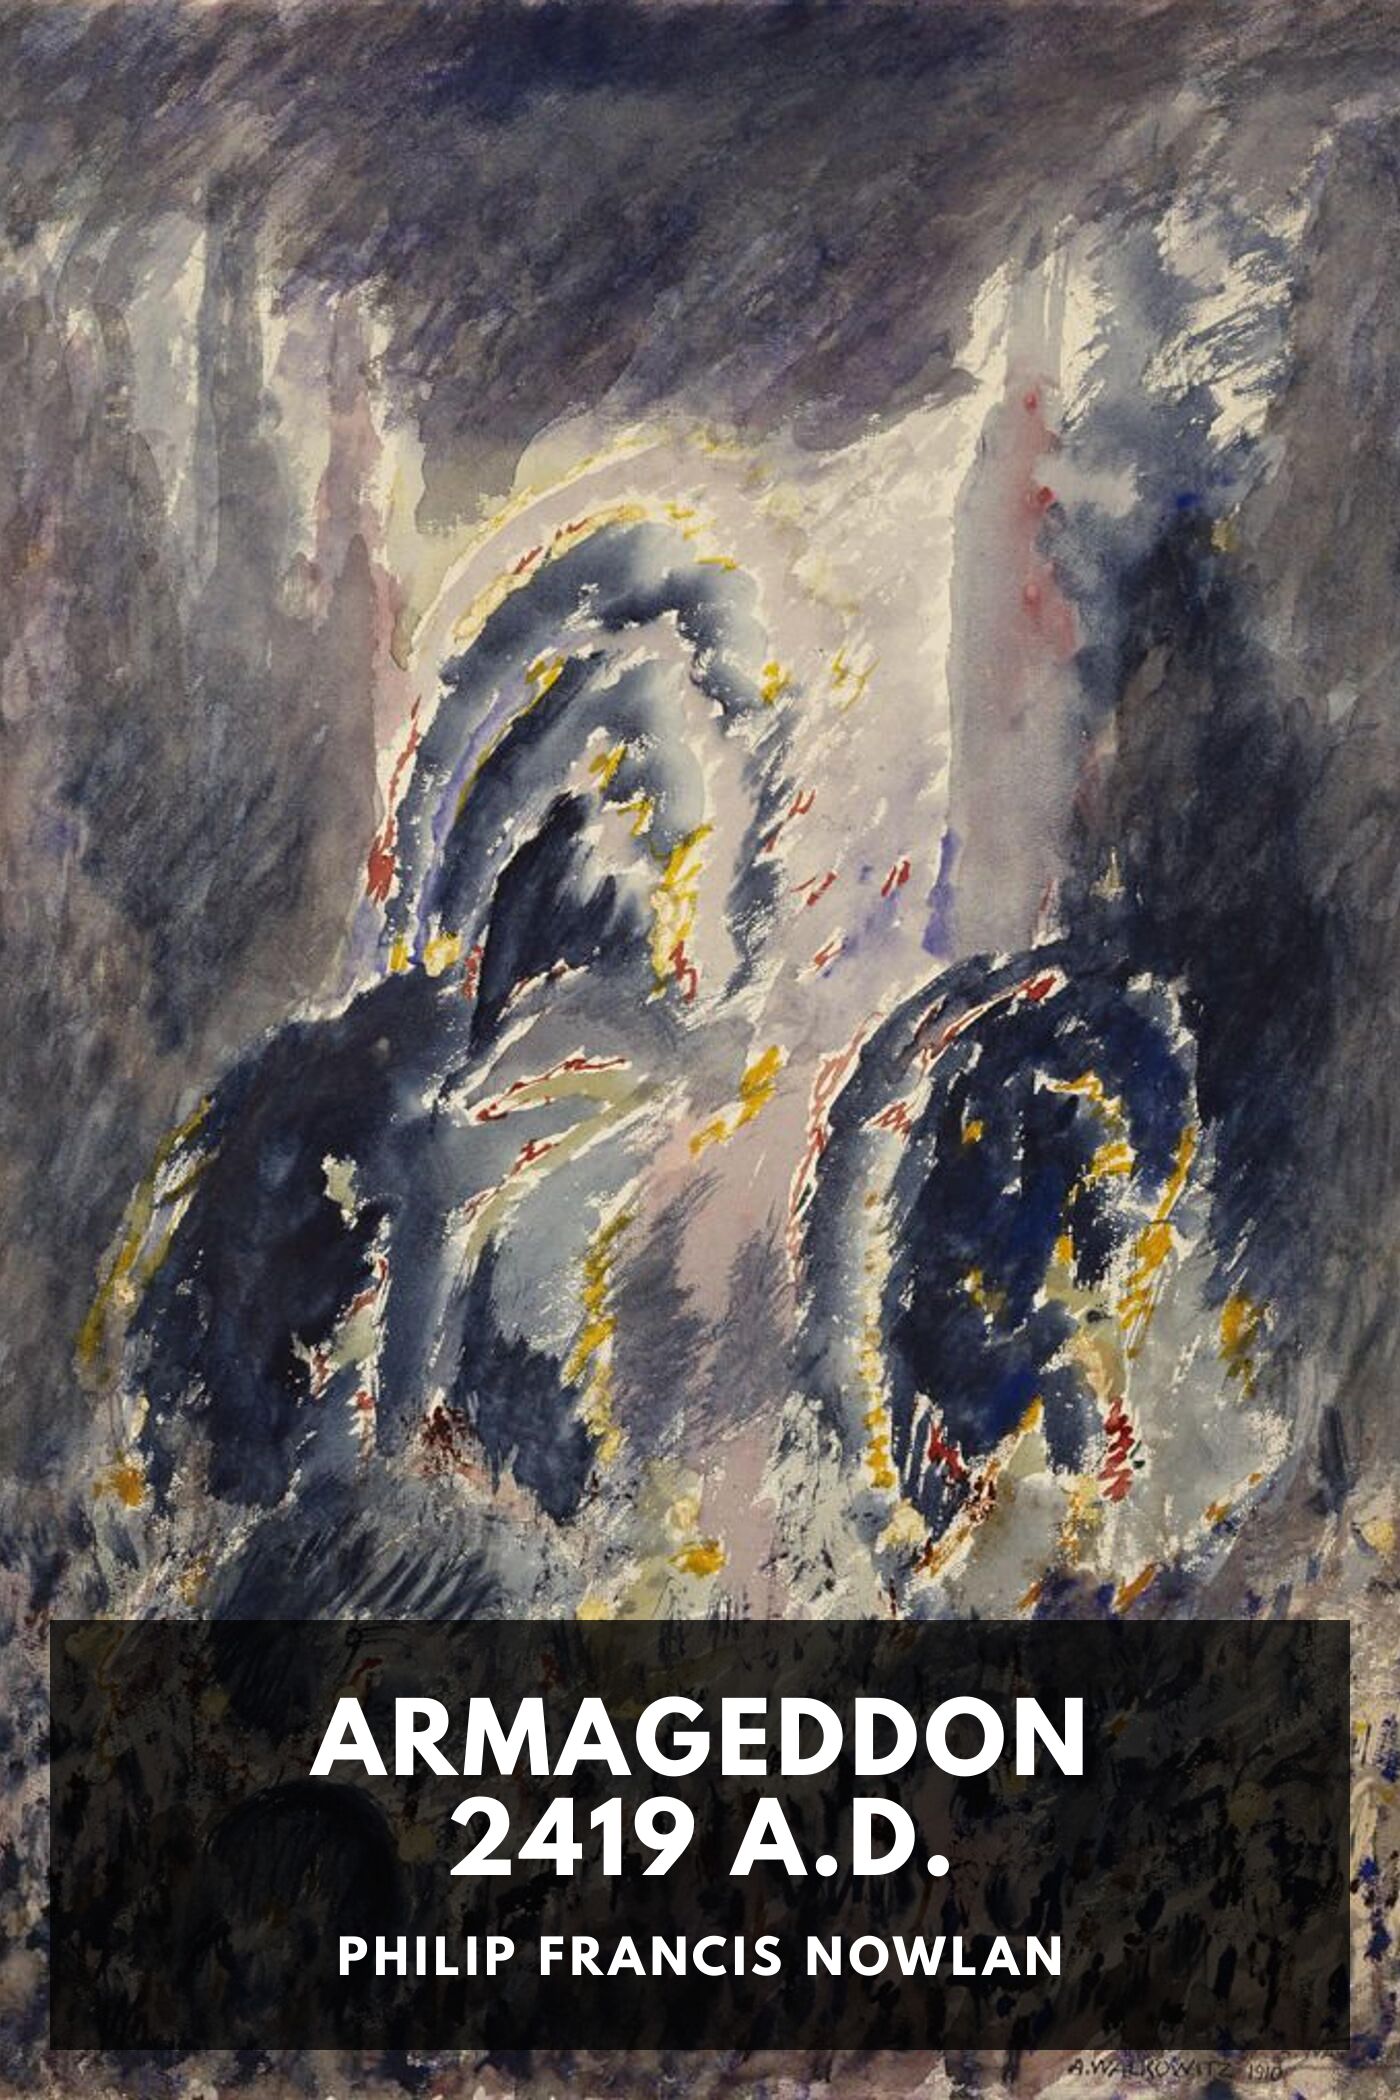 The armageddon movie download